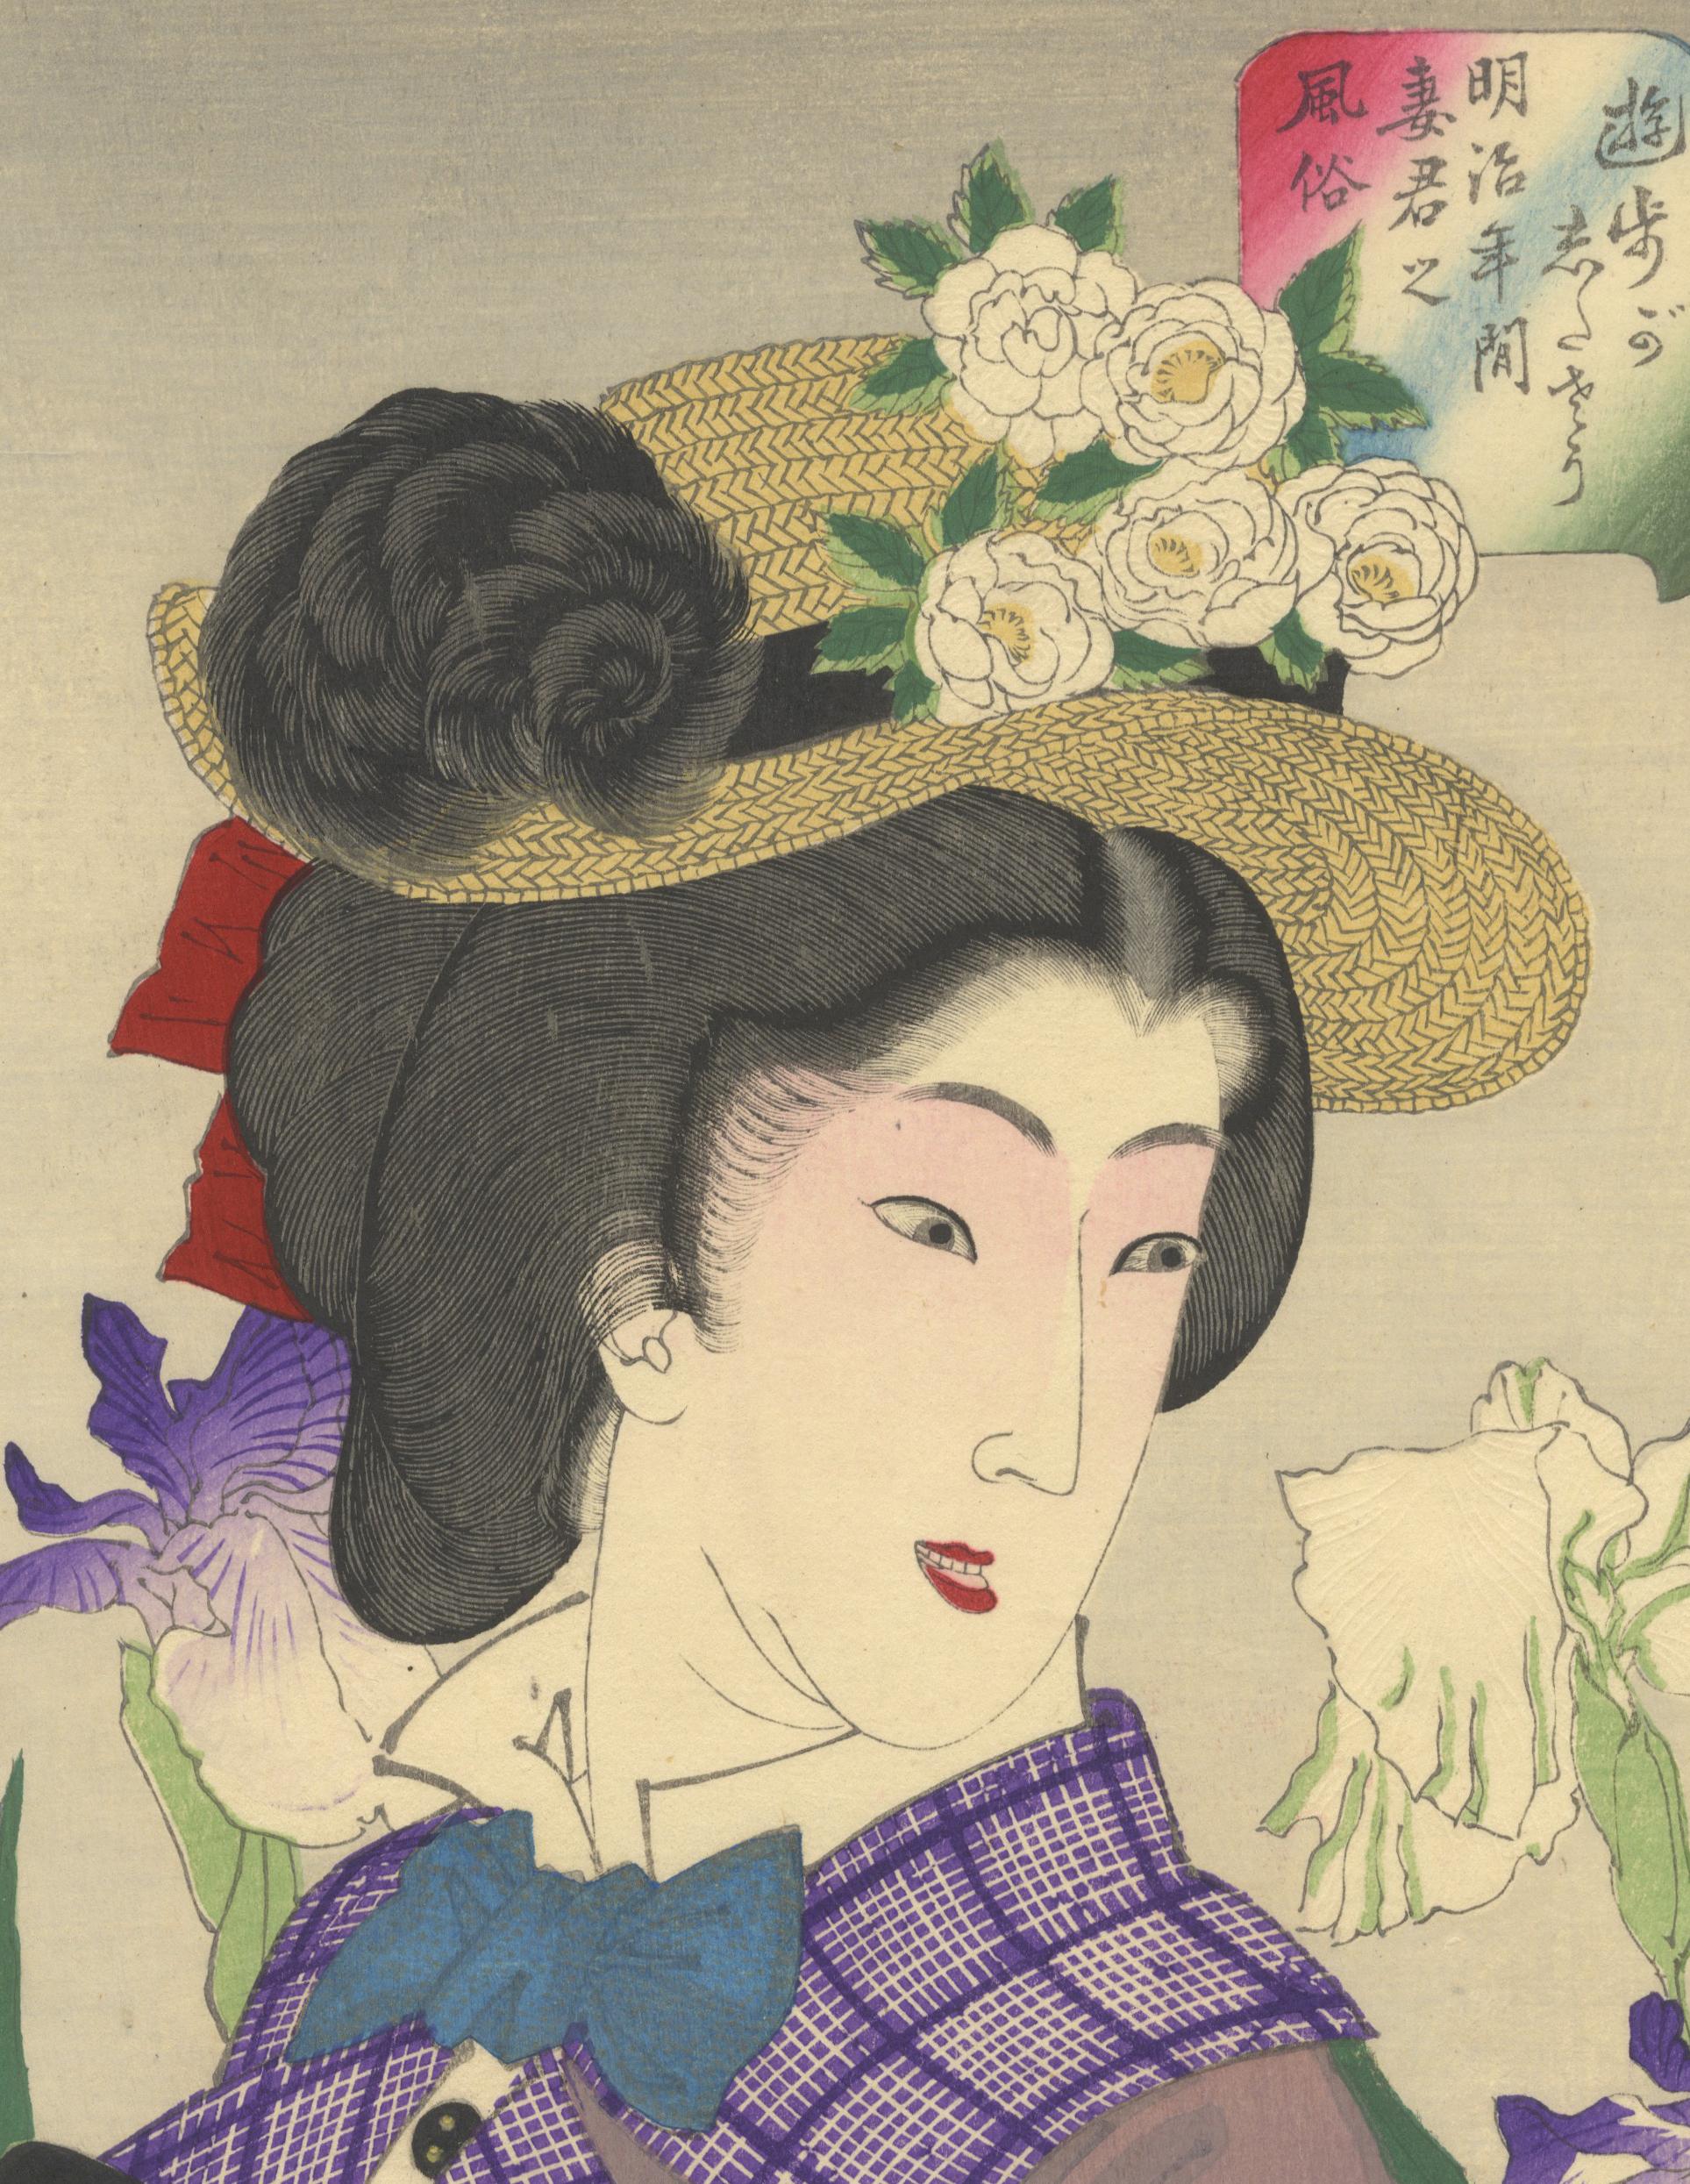 Artist:  Yoshitoshi Tsukioka (1839-1892)
Title:  'Yu-hogashitasou' A wife of the Meiji era (1868-1912) having a walk
Series title: Fuzoku Sanjuniso (Thirty-two Aspects of Customs and Manners)
Publisher: Tsunashima Kamekichi
Date: 1888
Dimensions: